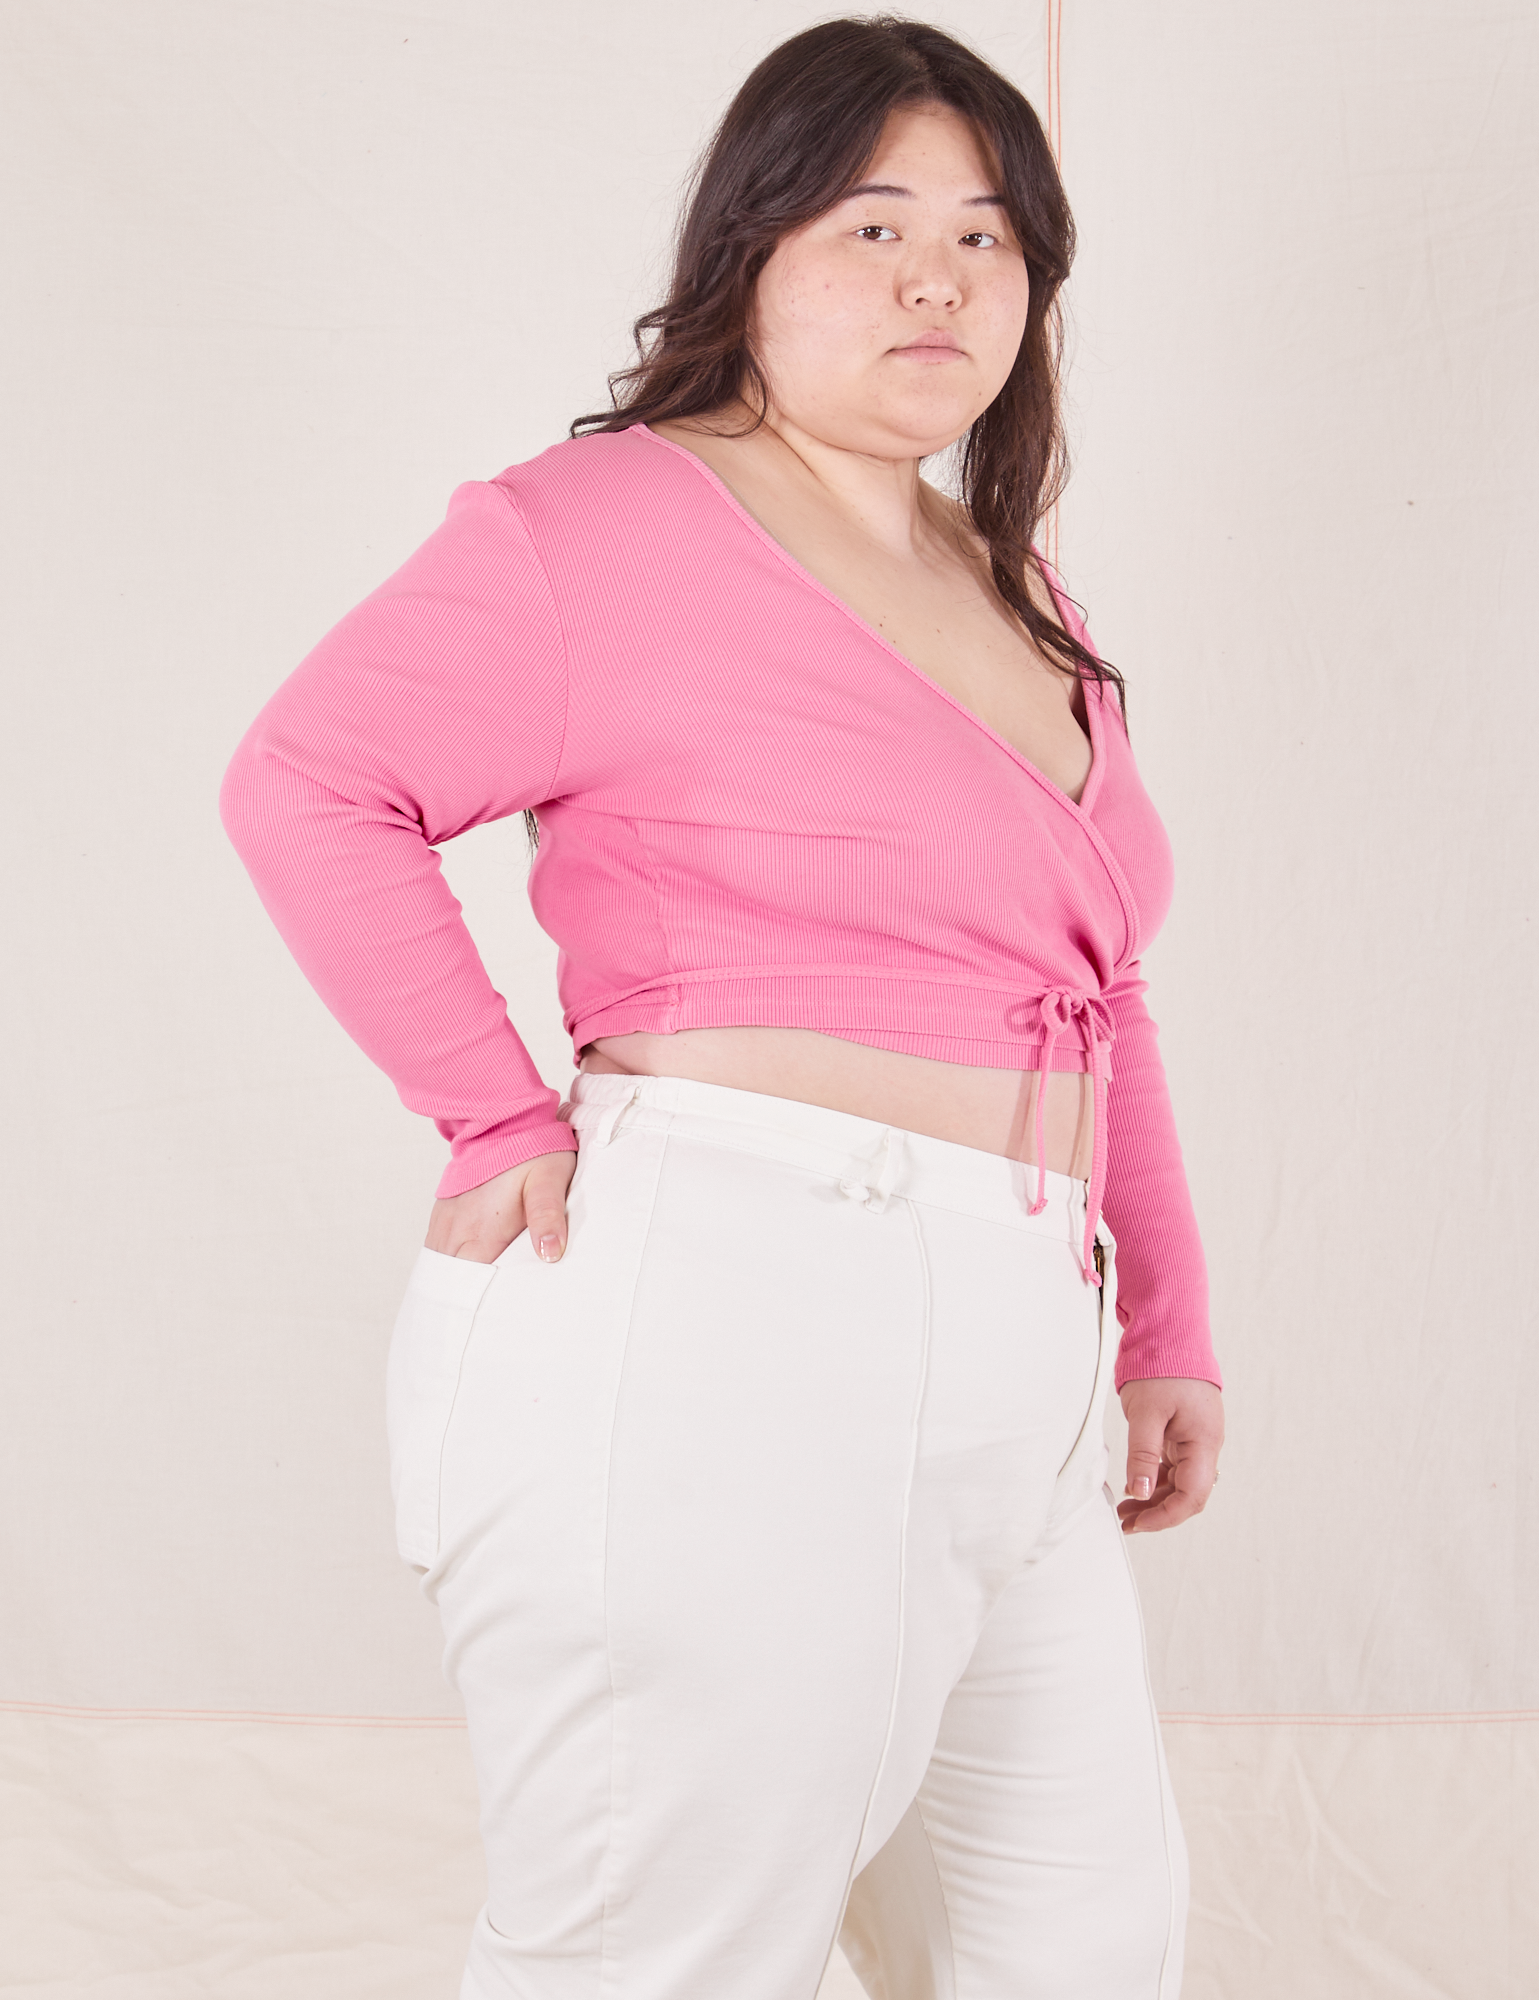 Wrap Top in Bubblegum Pink side view on Ashley wearing vintage tee off-white Western Pants